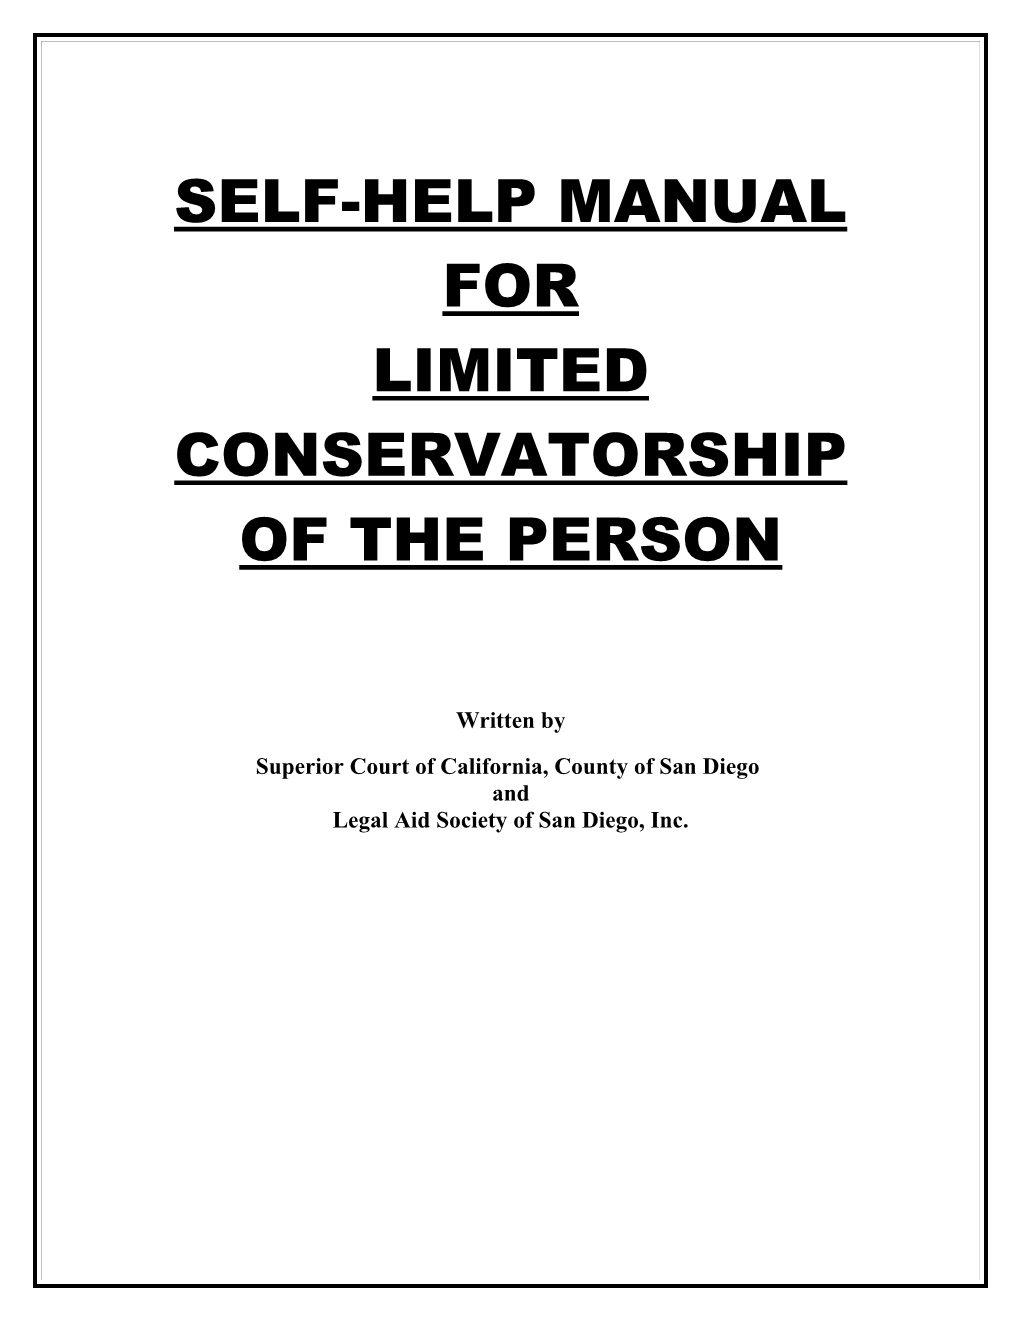 Self-Help Manual